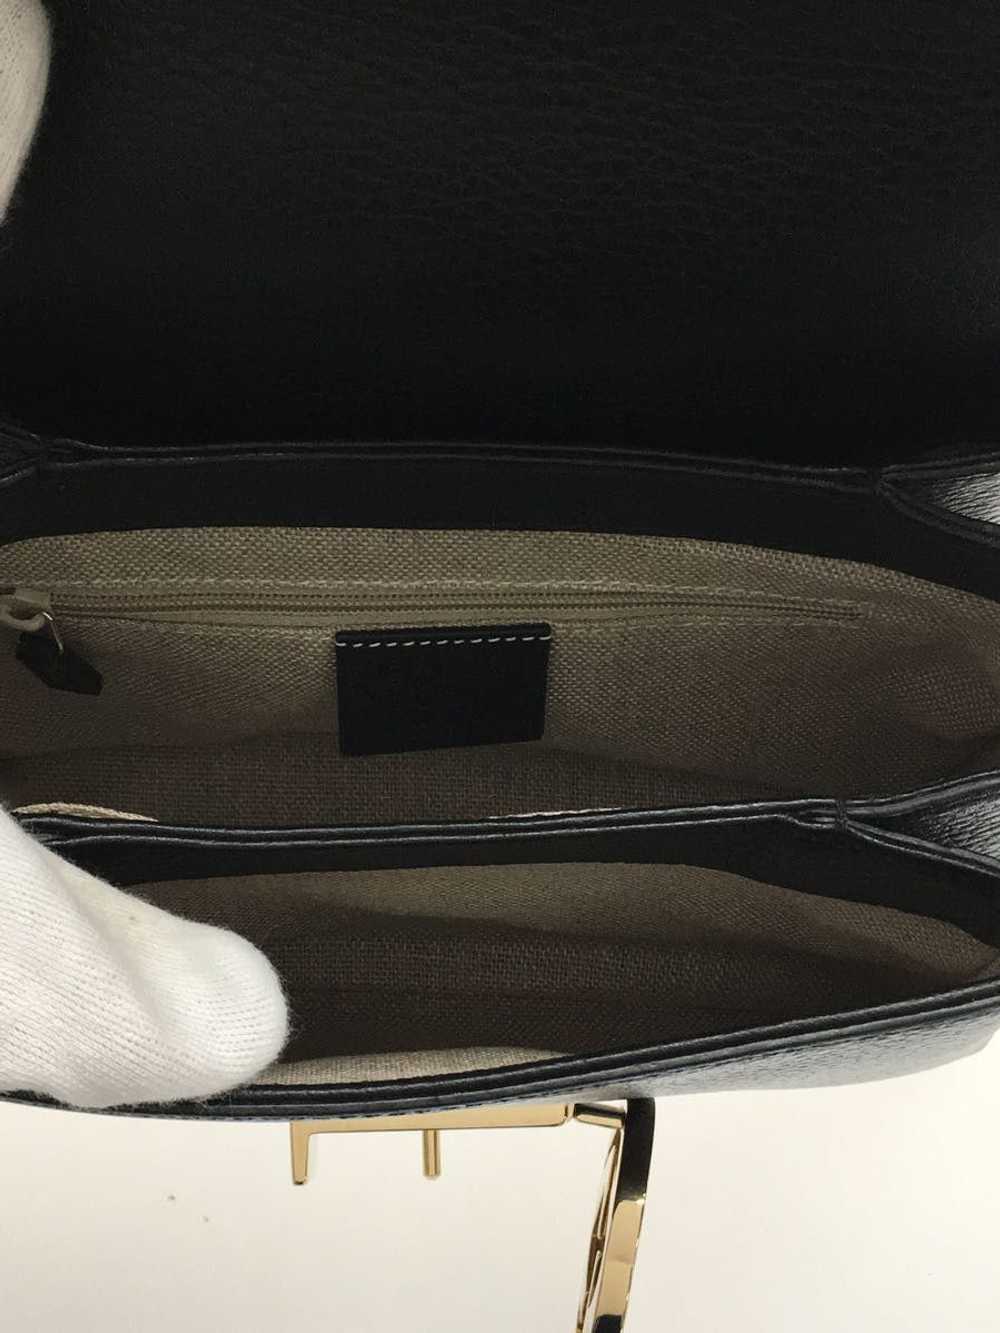 Gucci Gucci GG Shoulder Bag Handbag Black - image 6